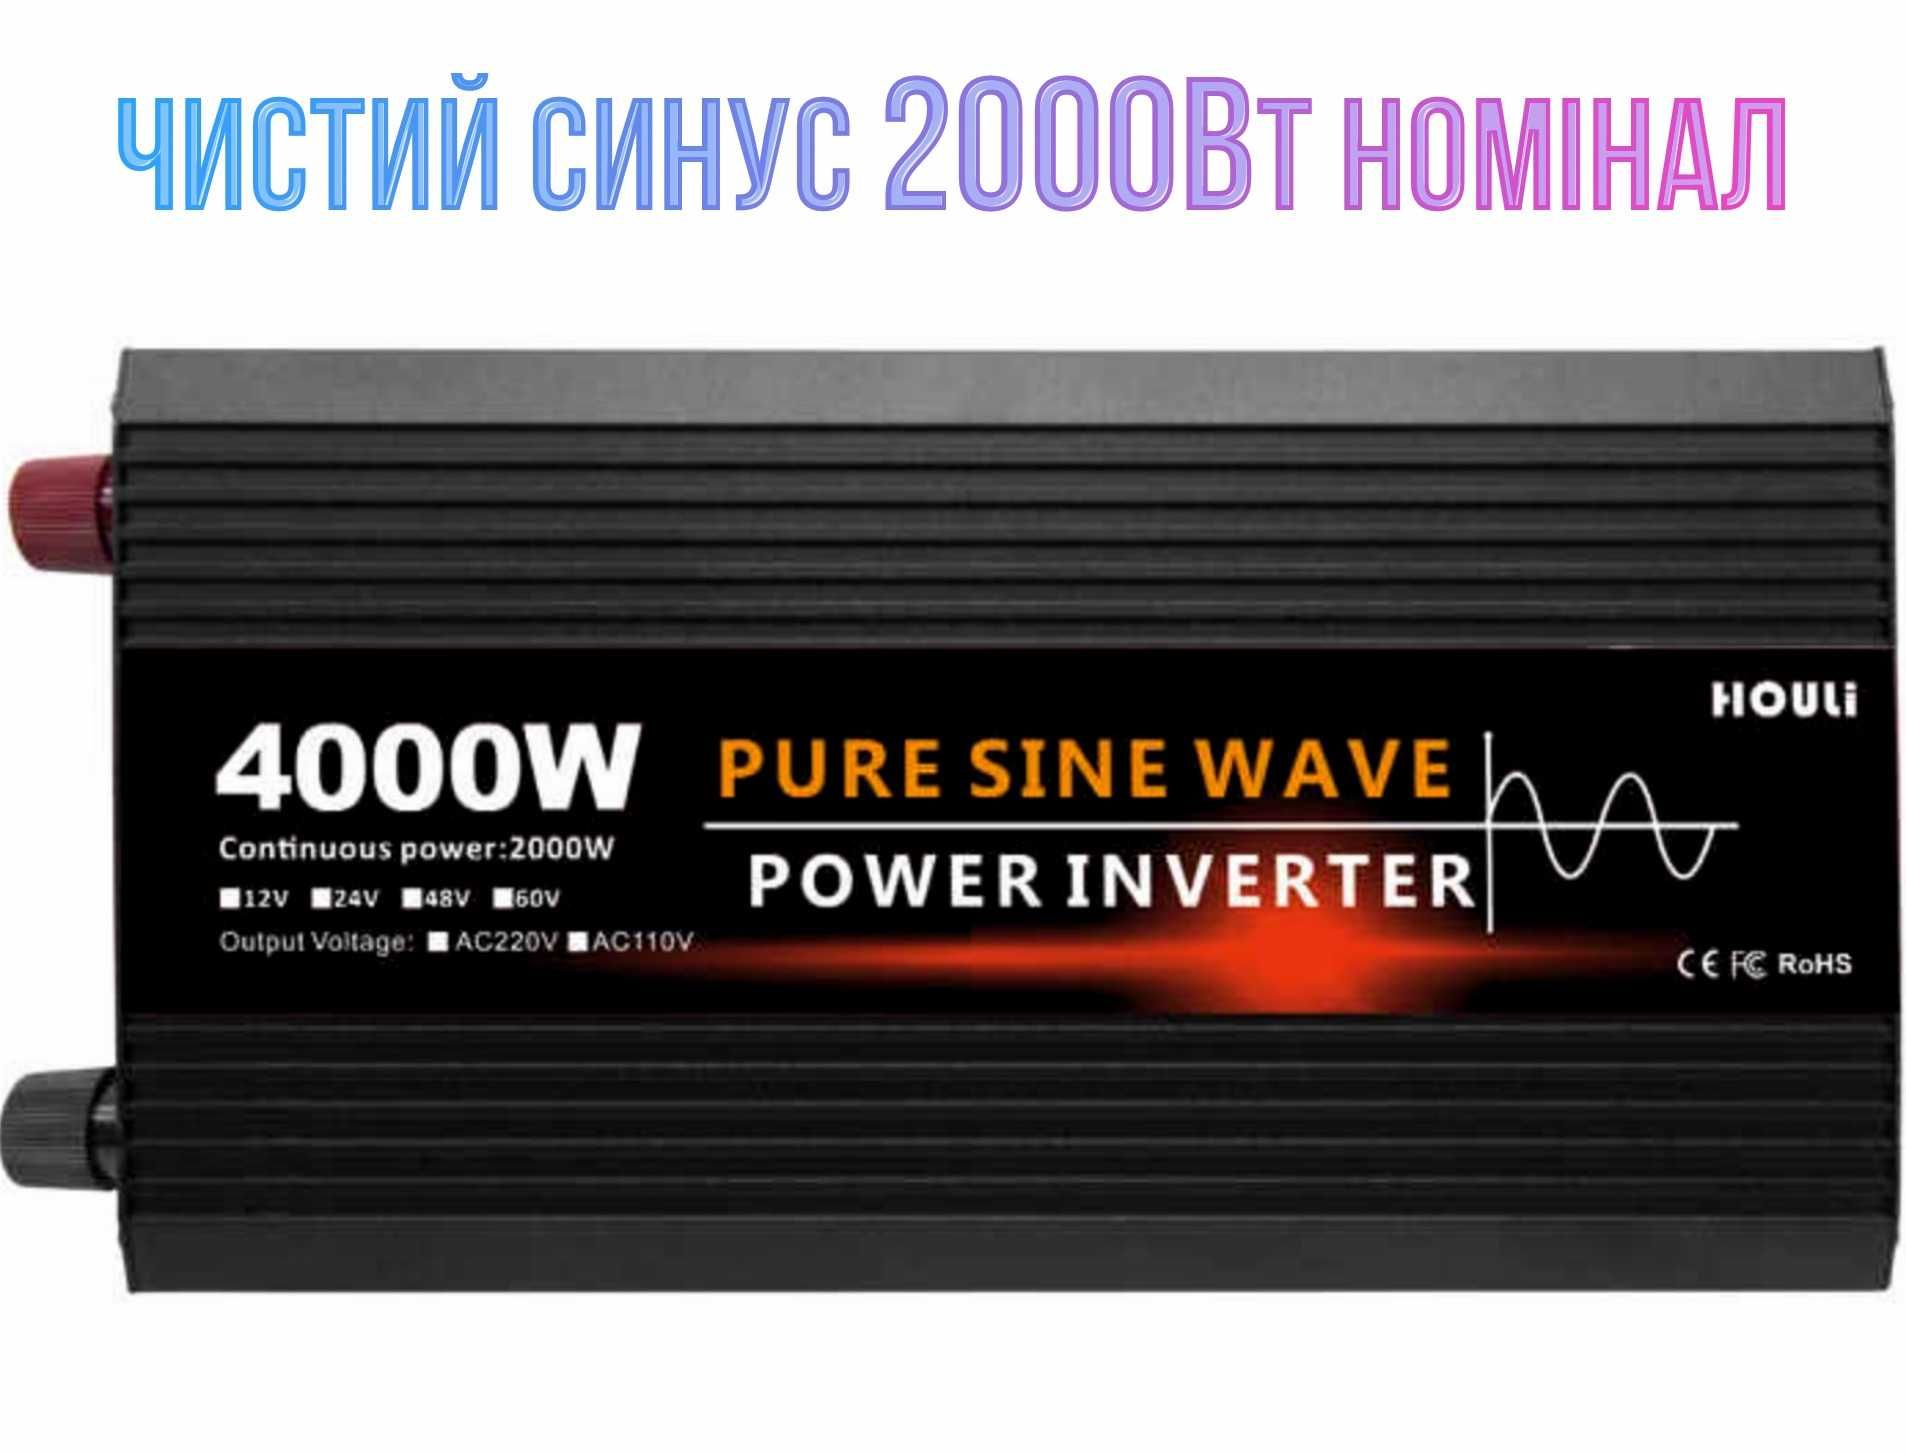 Инвертор Houli чистый синус номинал 2000Вт пик (4000Вт) 12v-220v